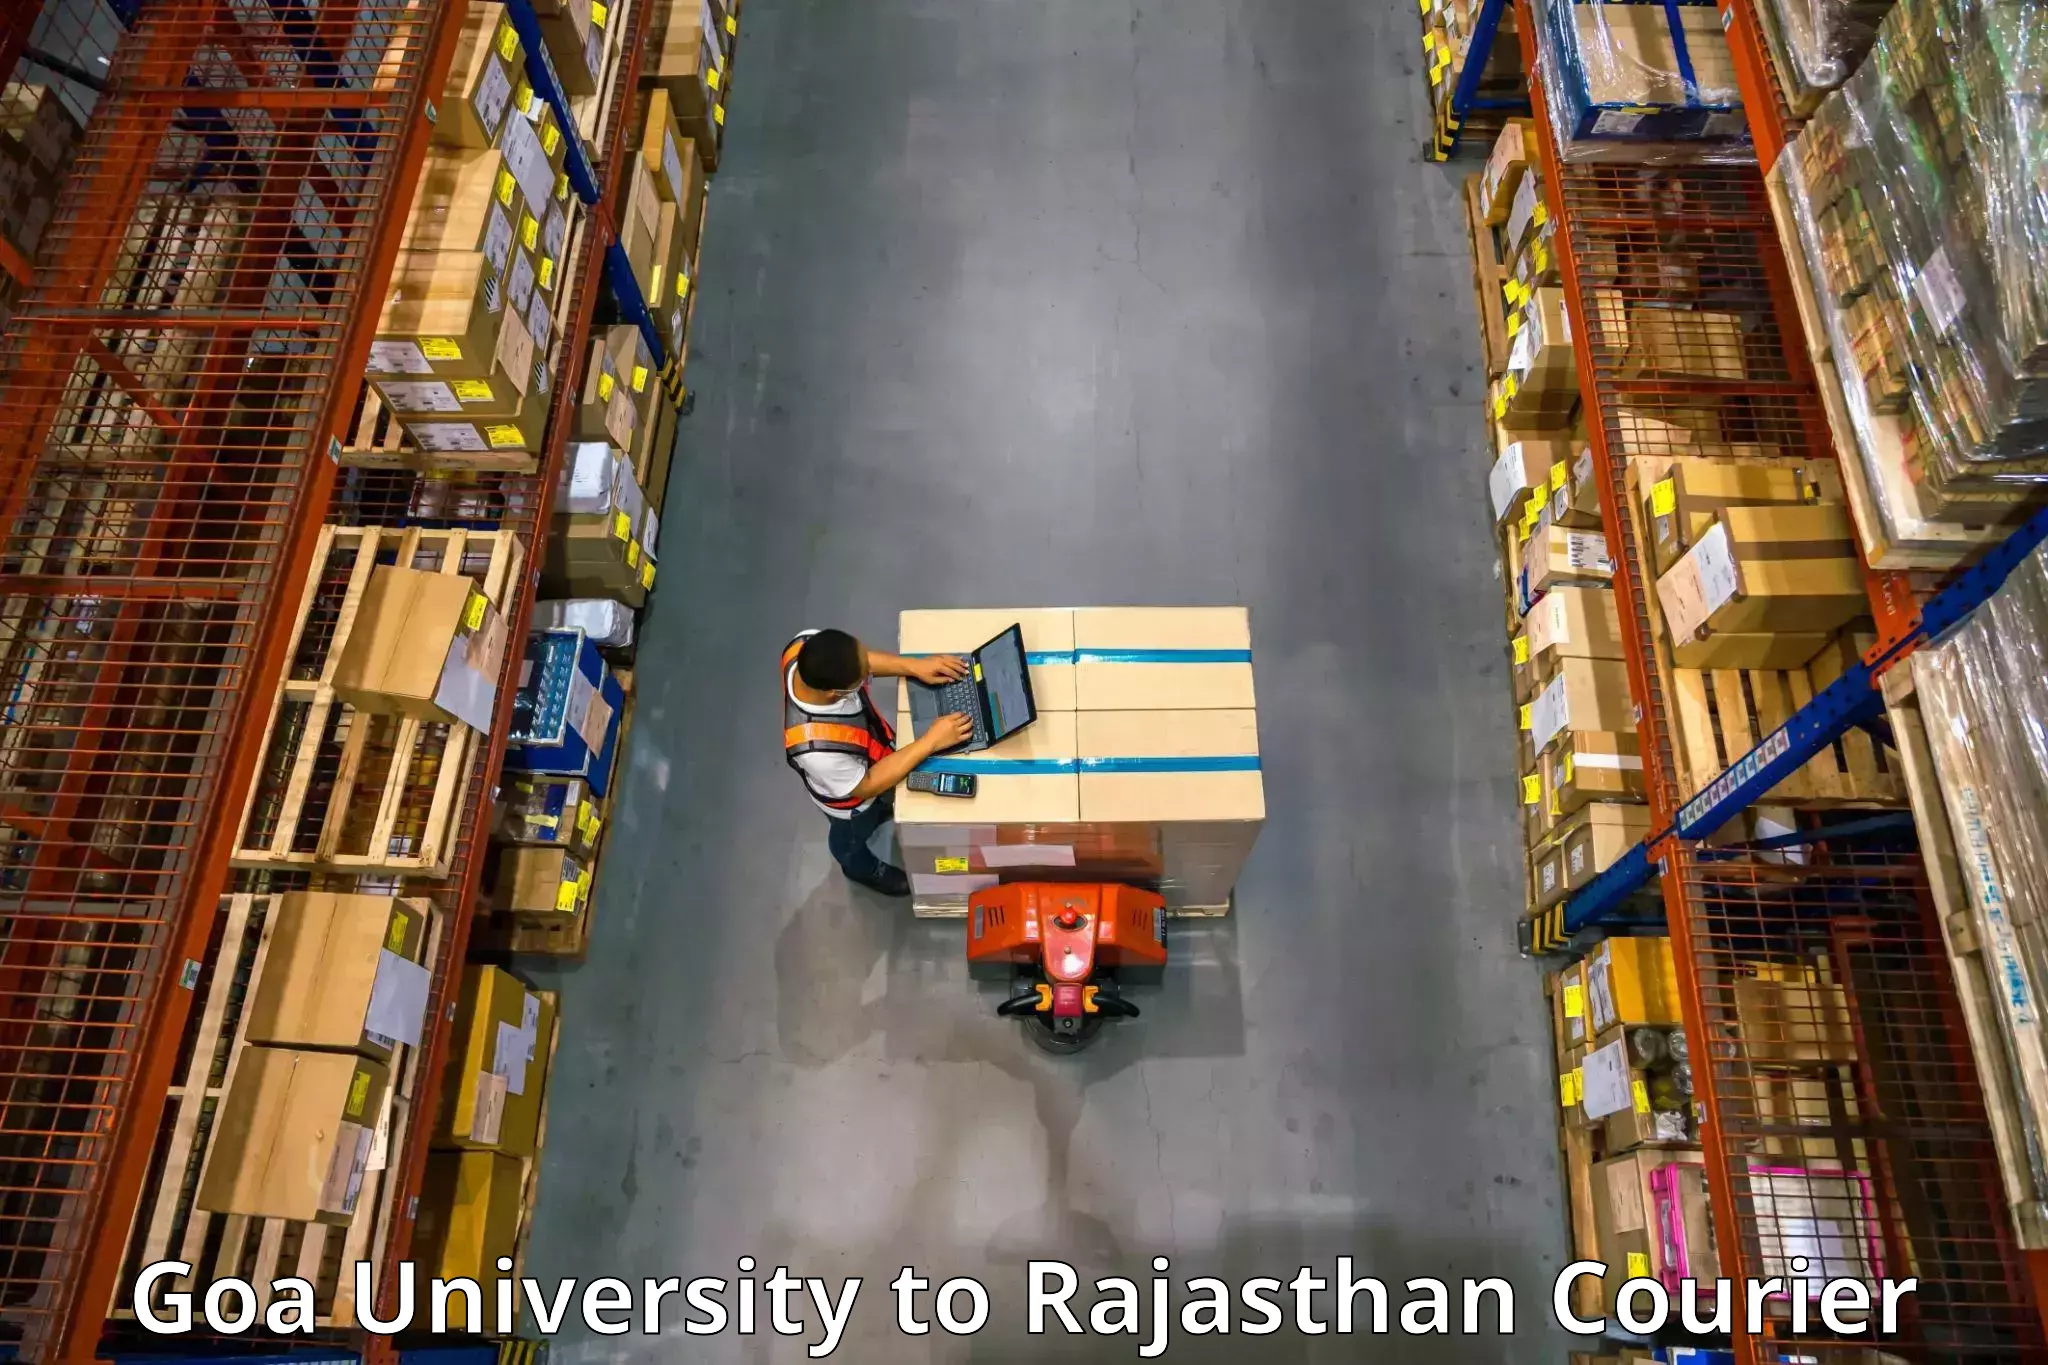 Furniture delivery service Goa University to Kumbhalgarh